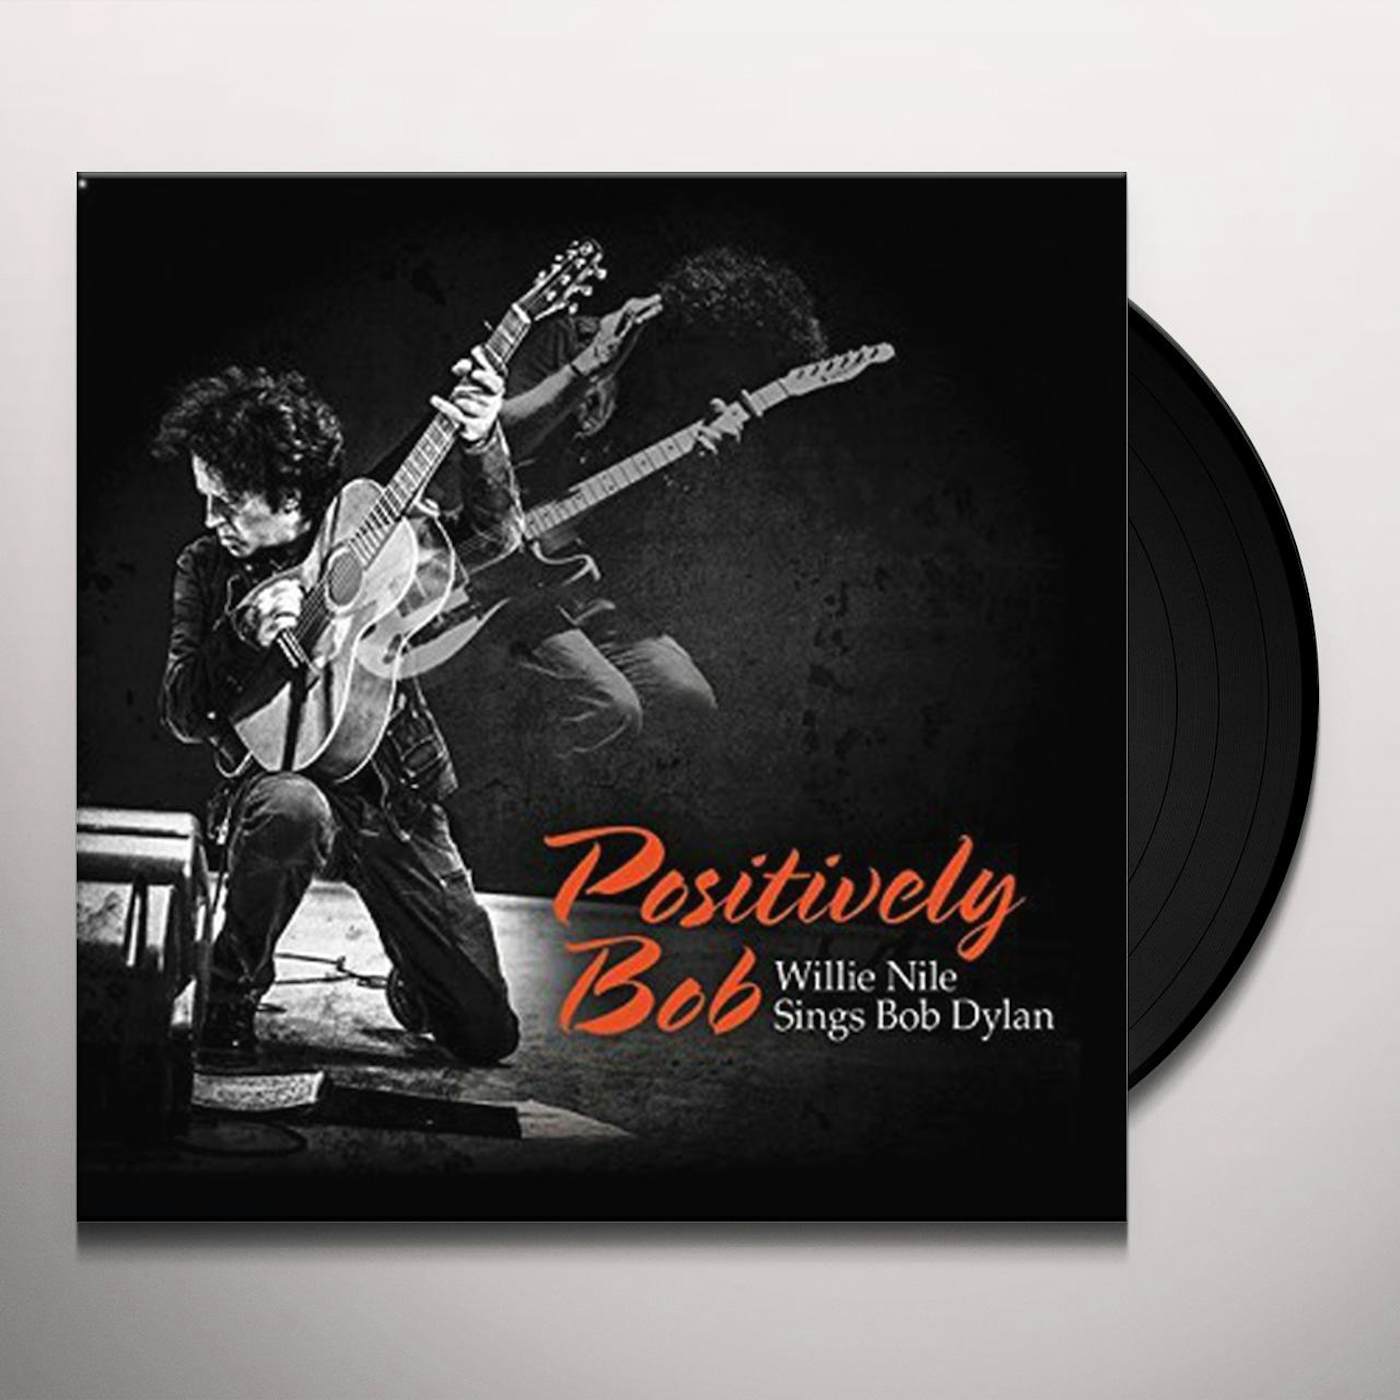 Positively Bob: Willie Nile Sings Bob Dylan Vinyl Record